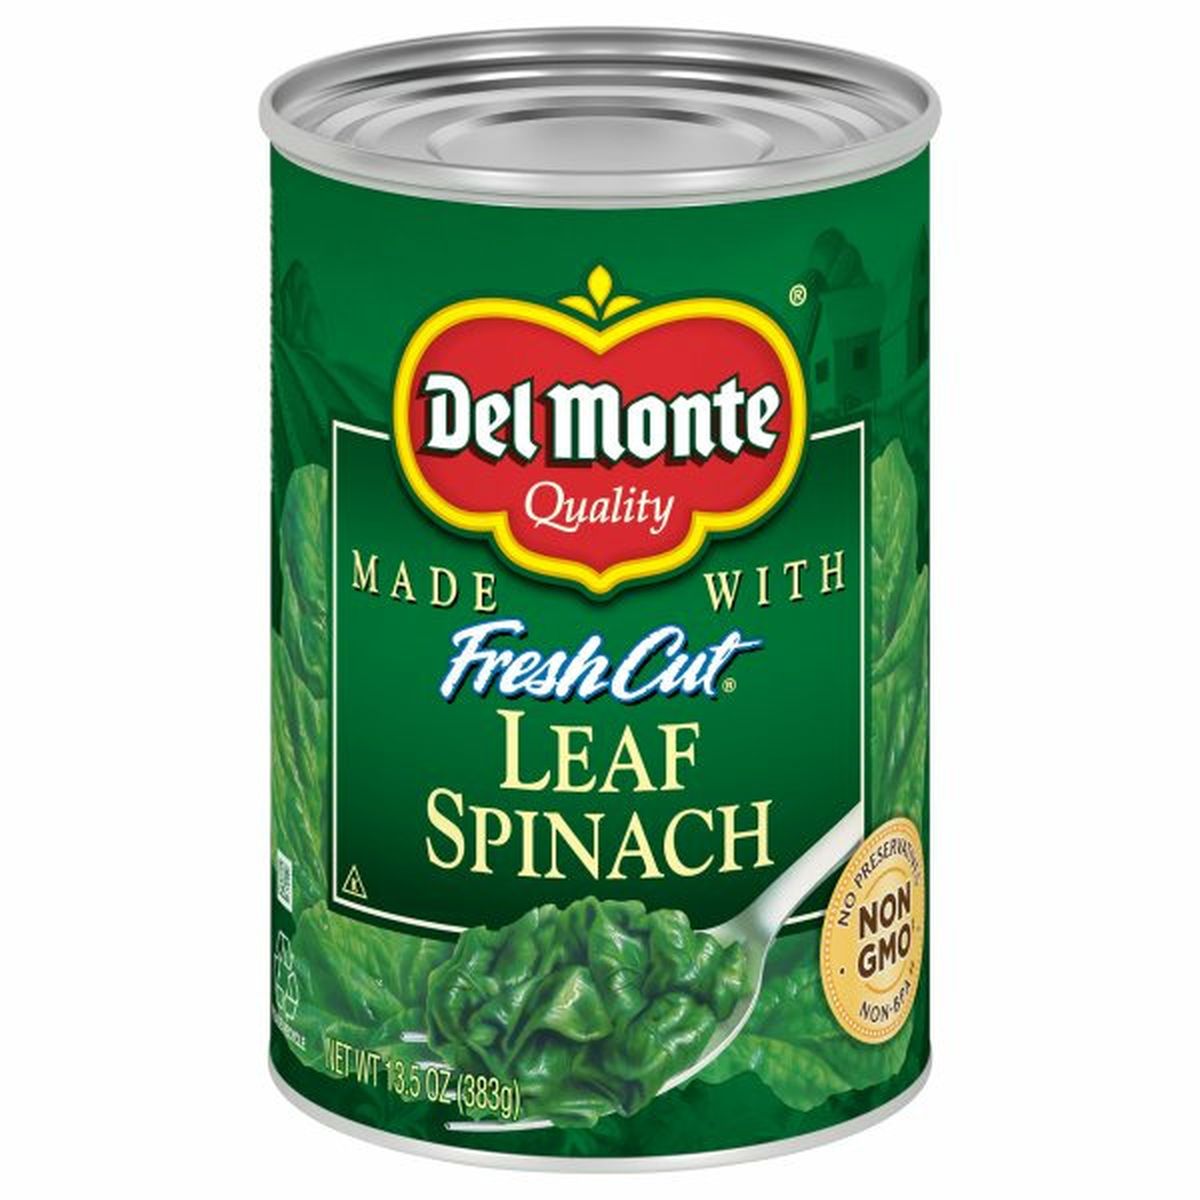 Calories in Del Monte Fresh Cut Leaf Spinach